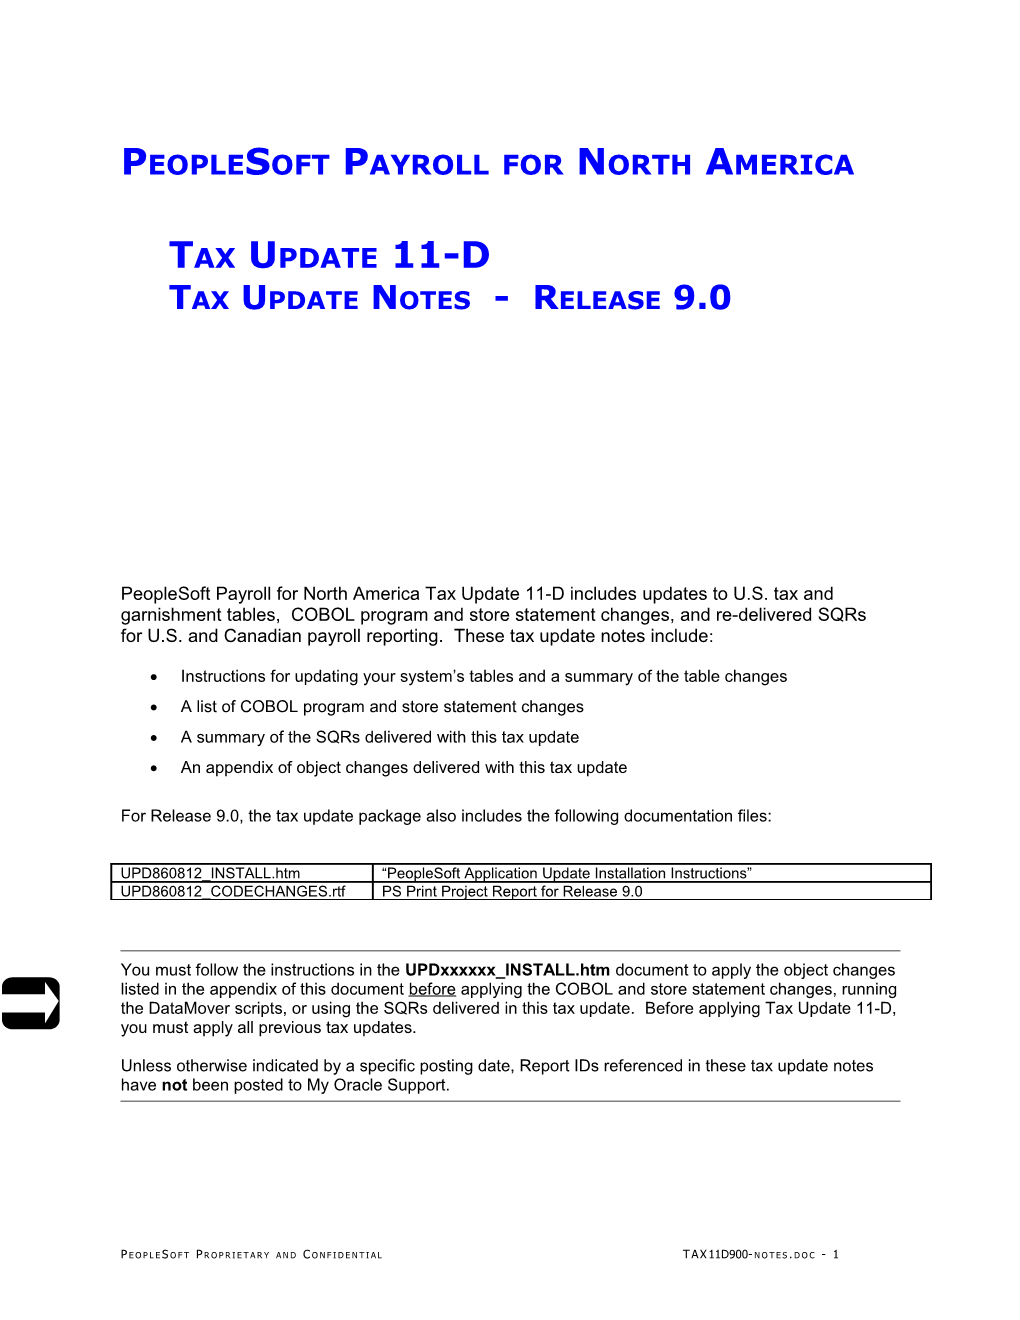 9.00 - Peoplesoft Payroll Tax Update 11-D